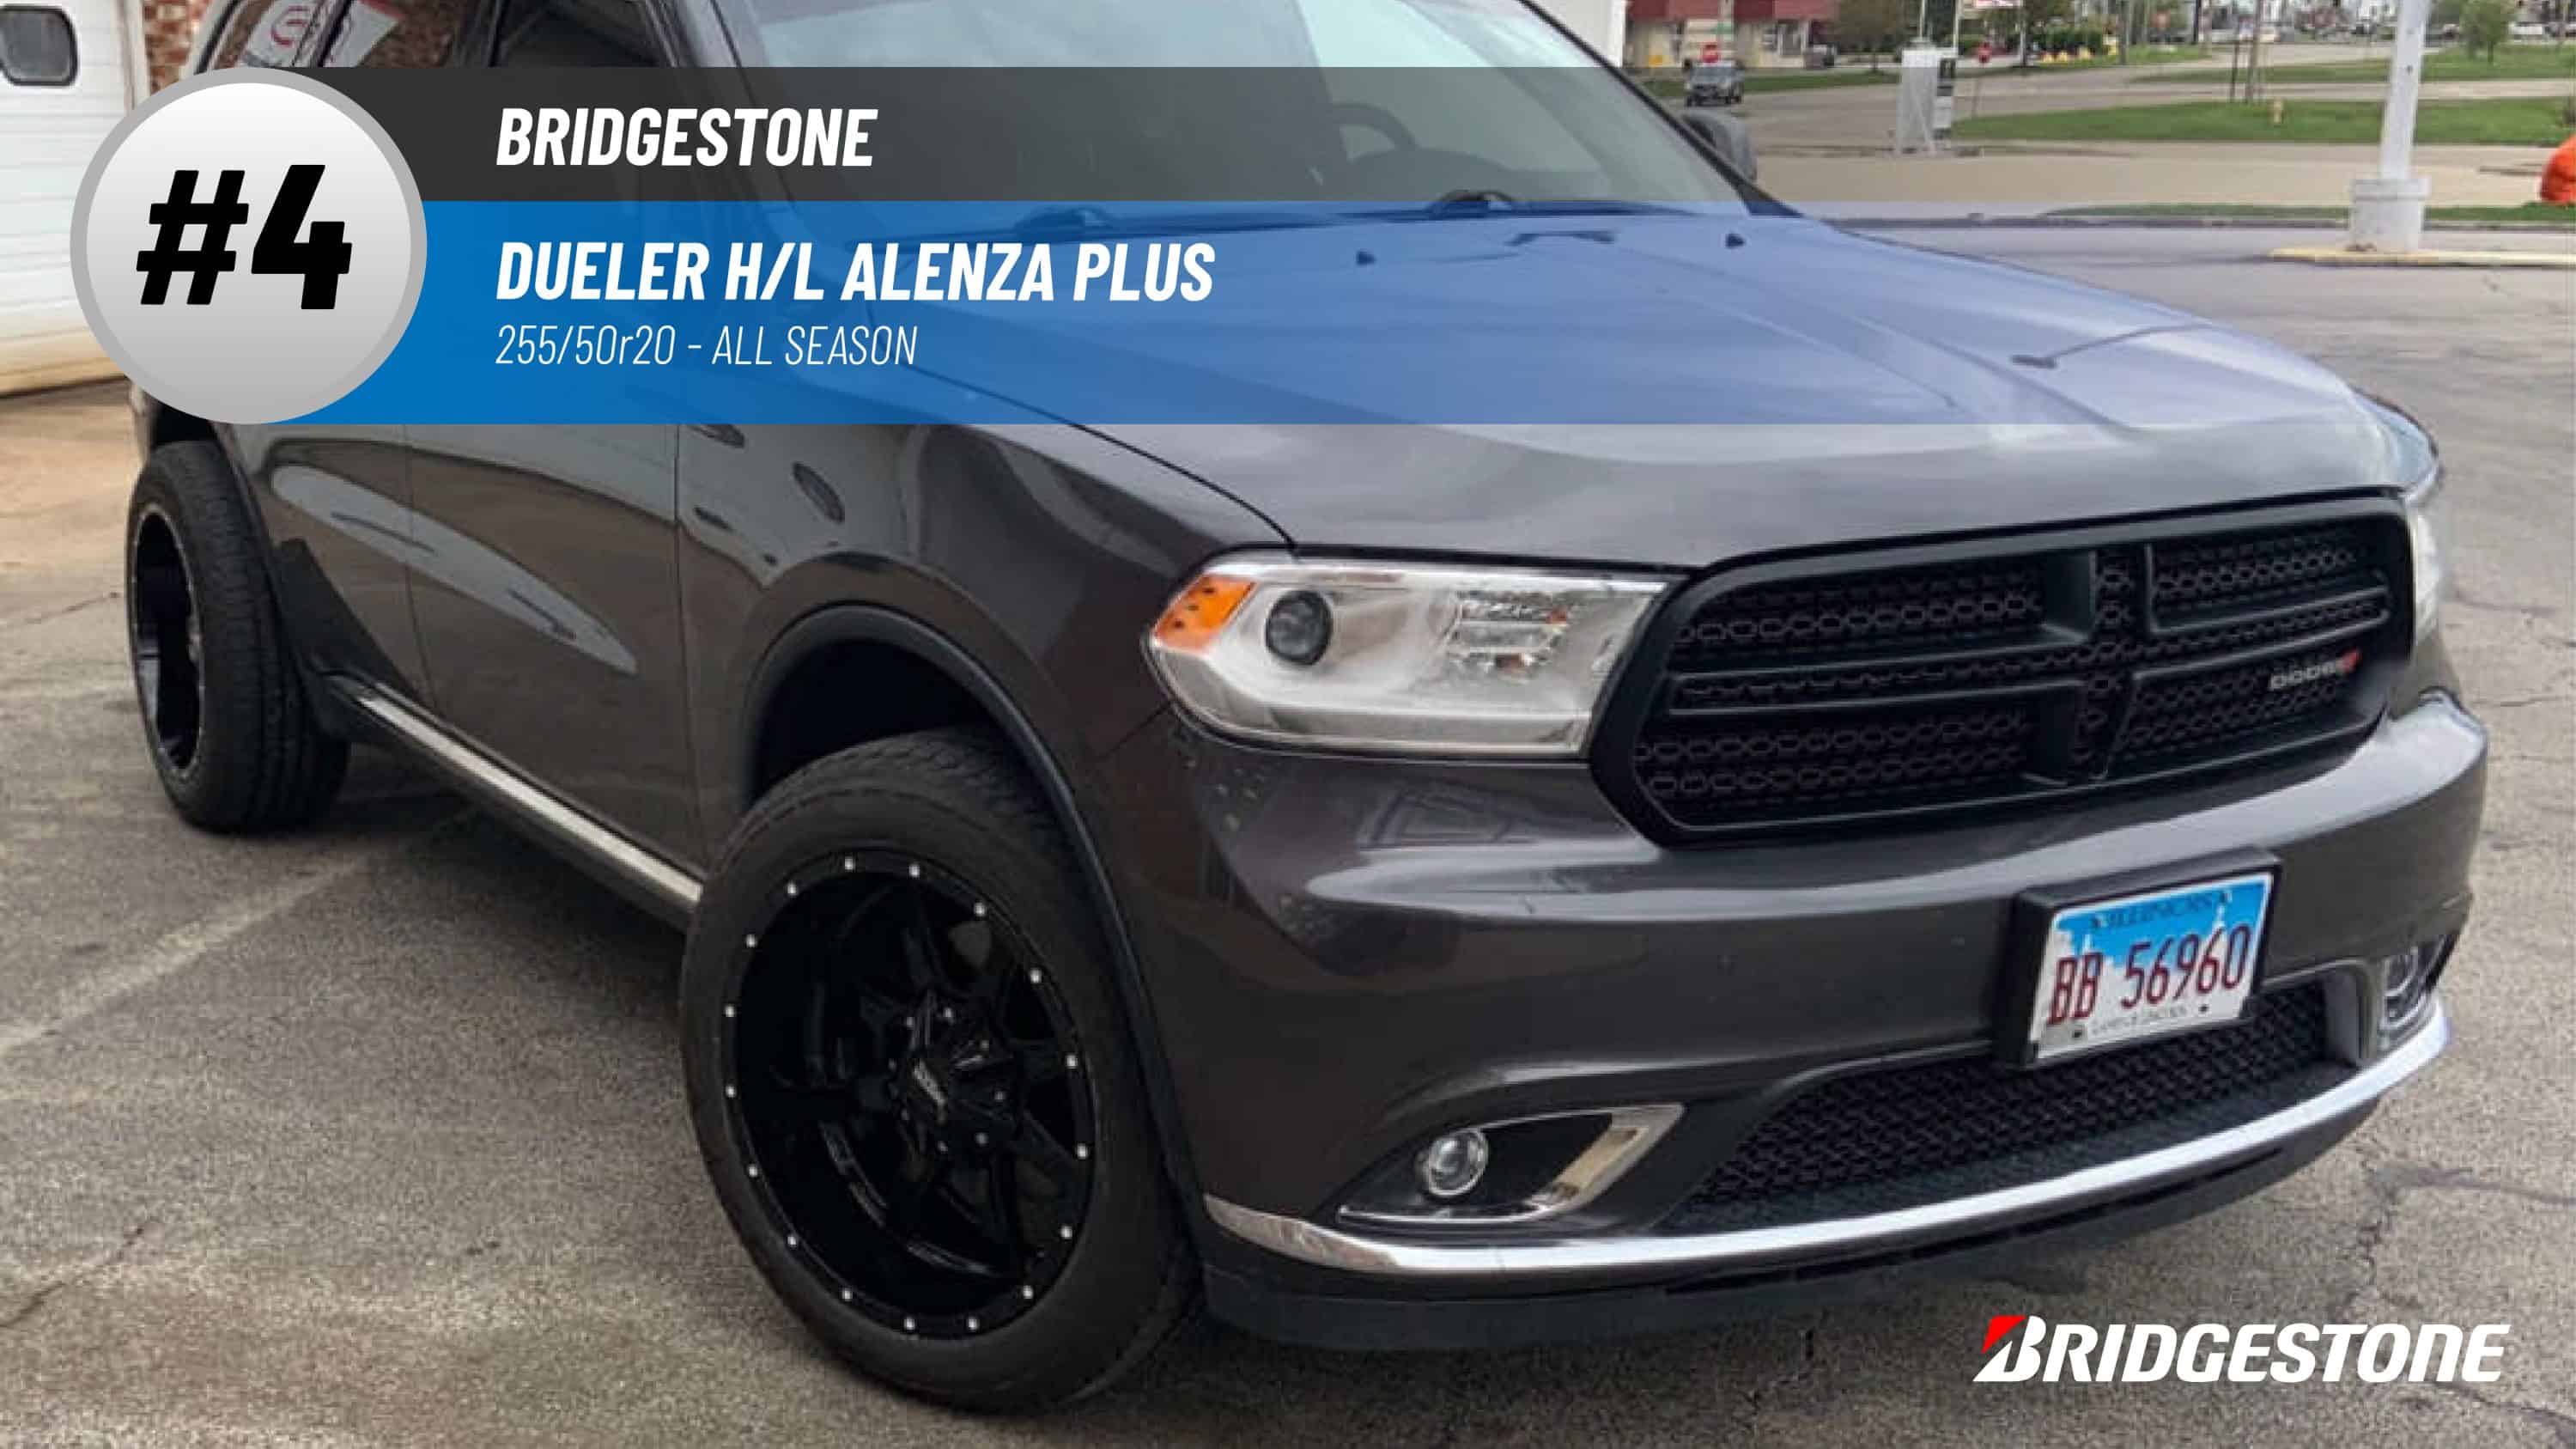 Top #4 All Season Tires: Bridgestone Dueler H/L Alenza Plus – 255/50r20